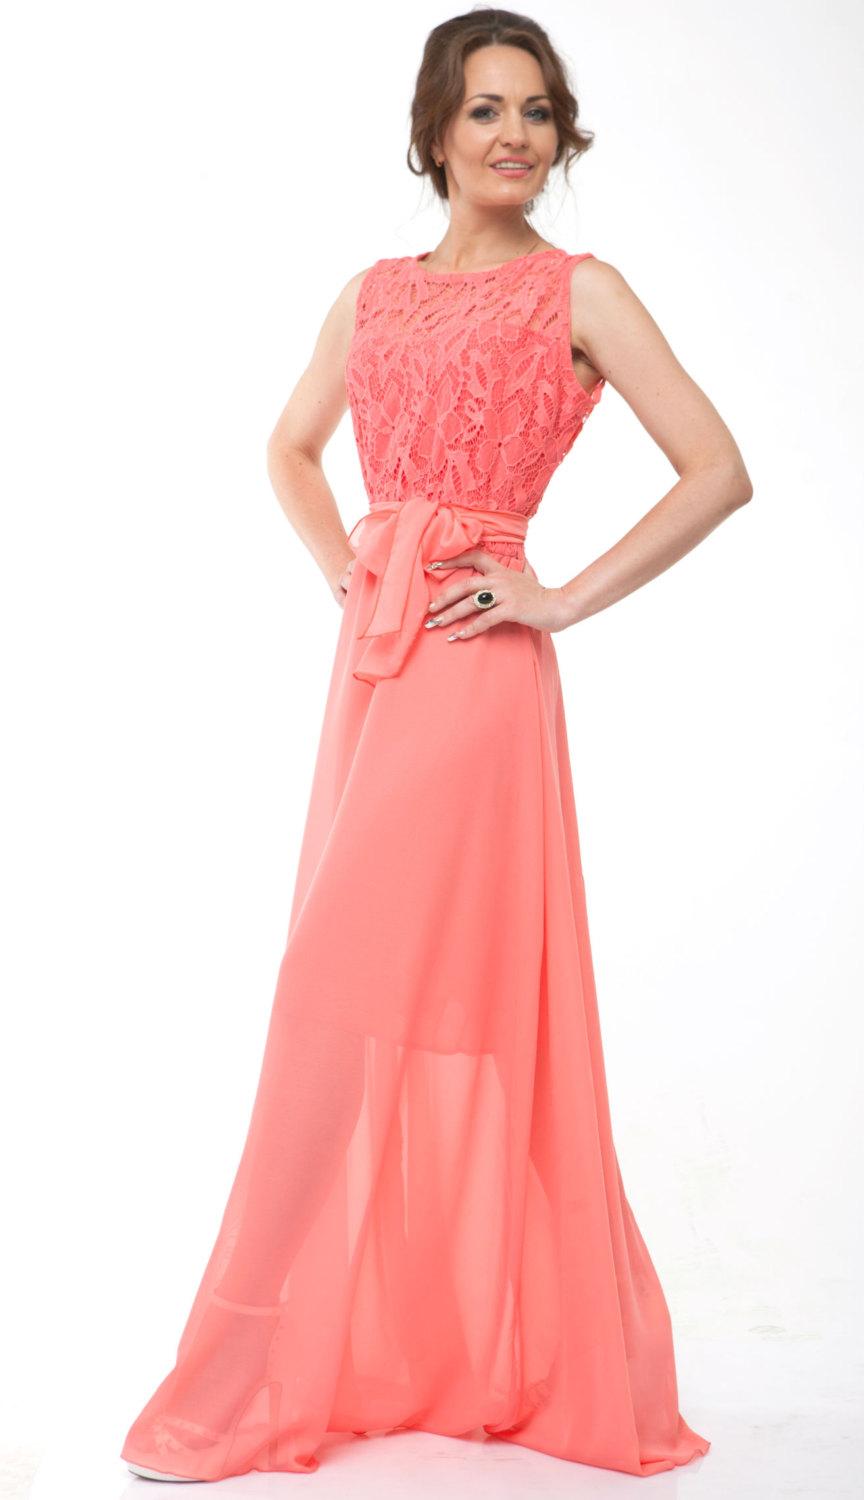 زفاف - Bridesmaid Dress Lace Chiffon Long Dress Wedding coral.